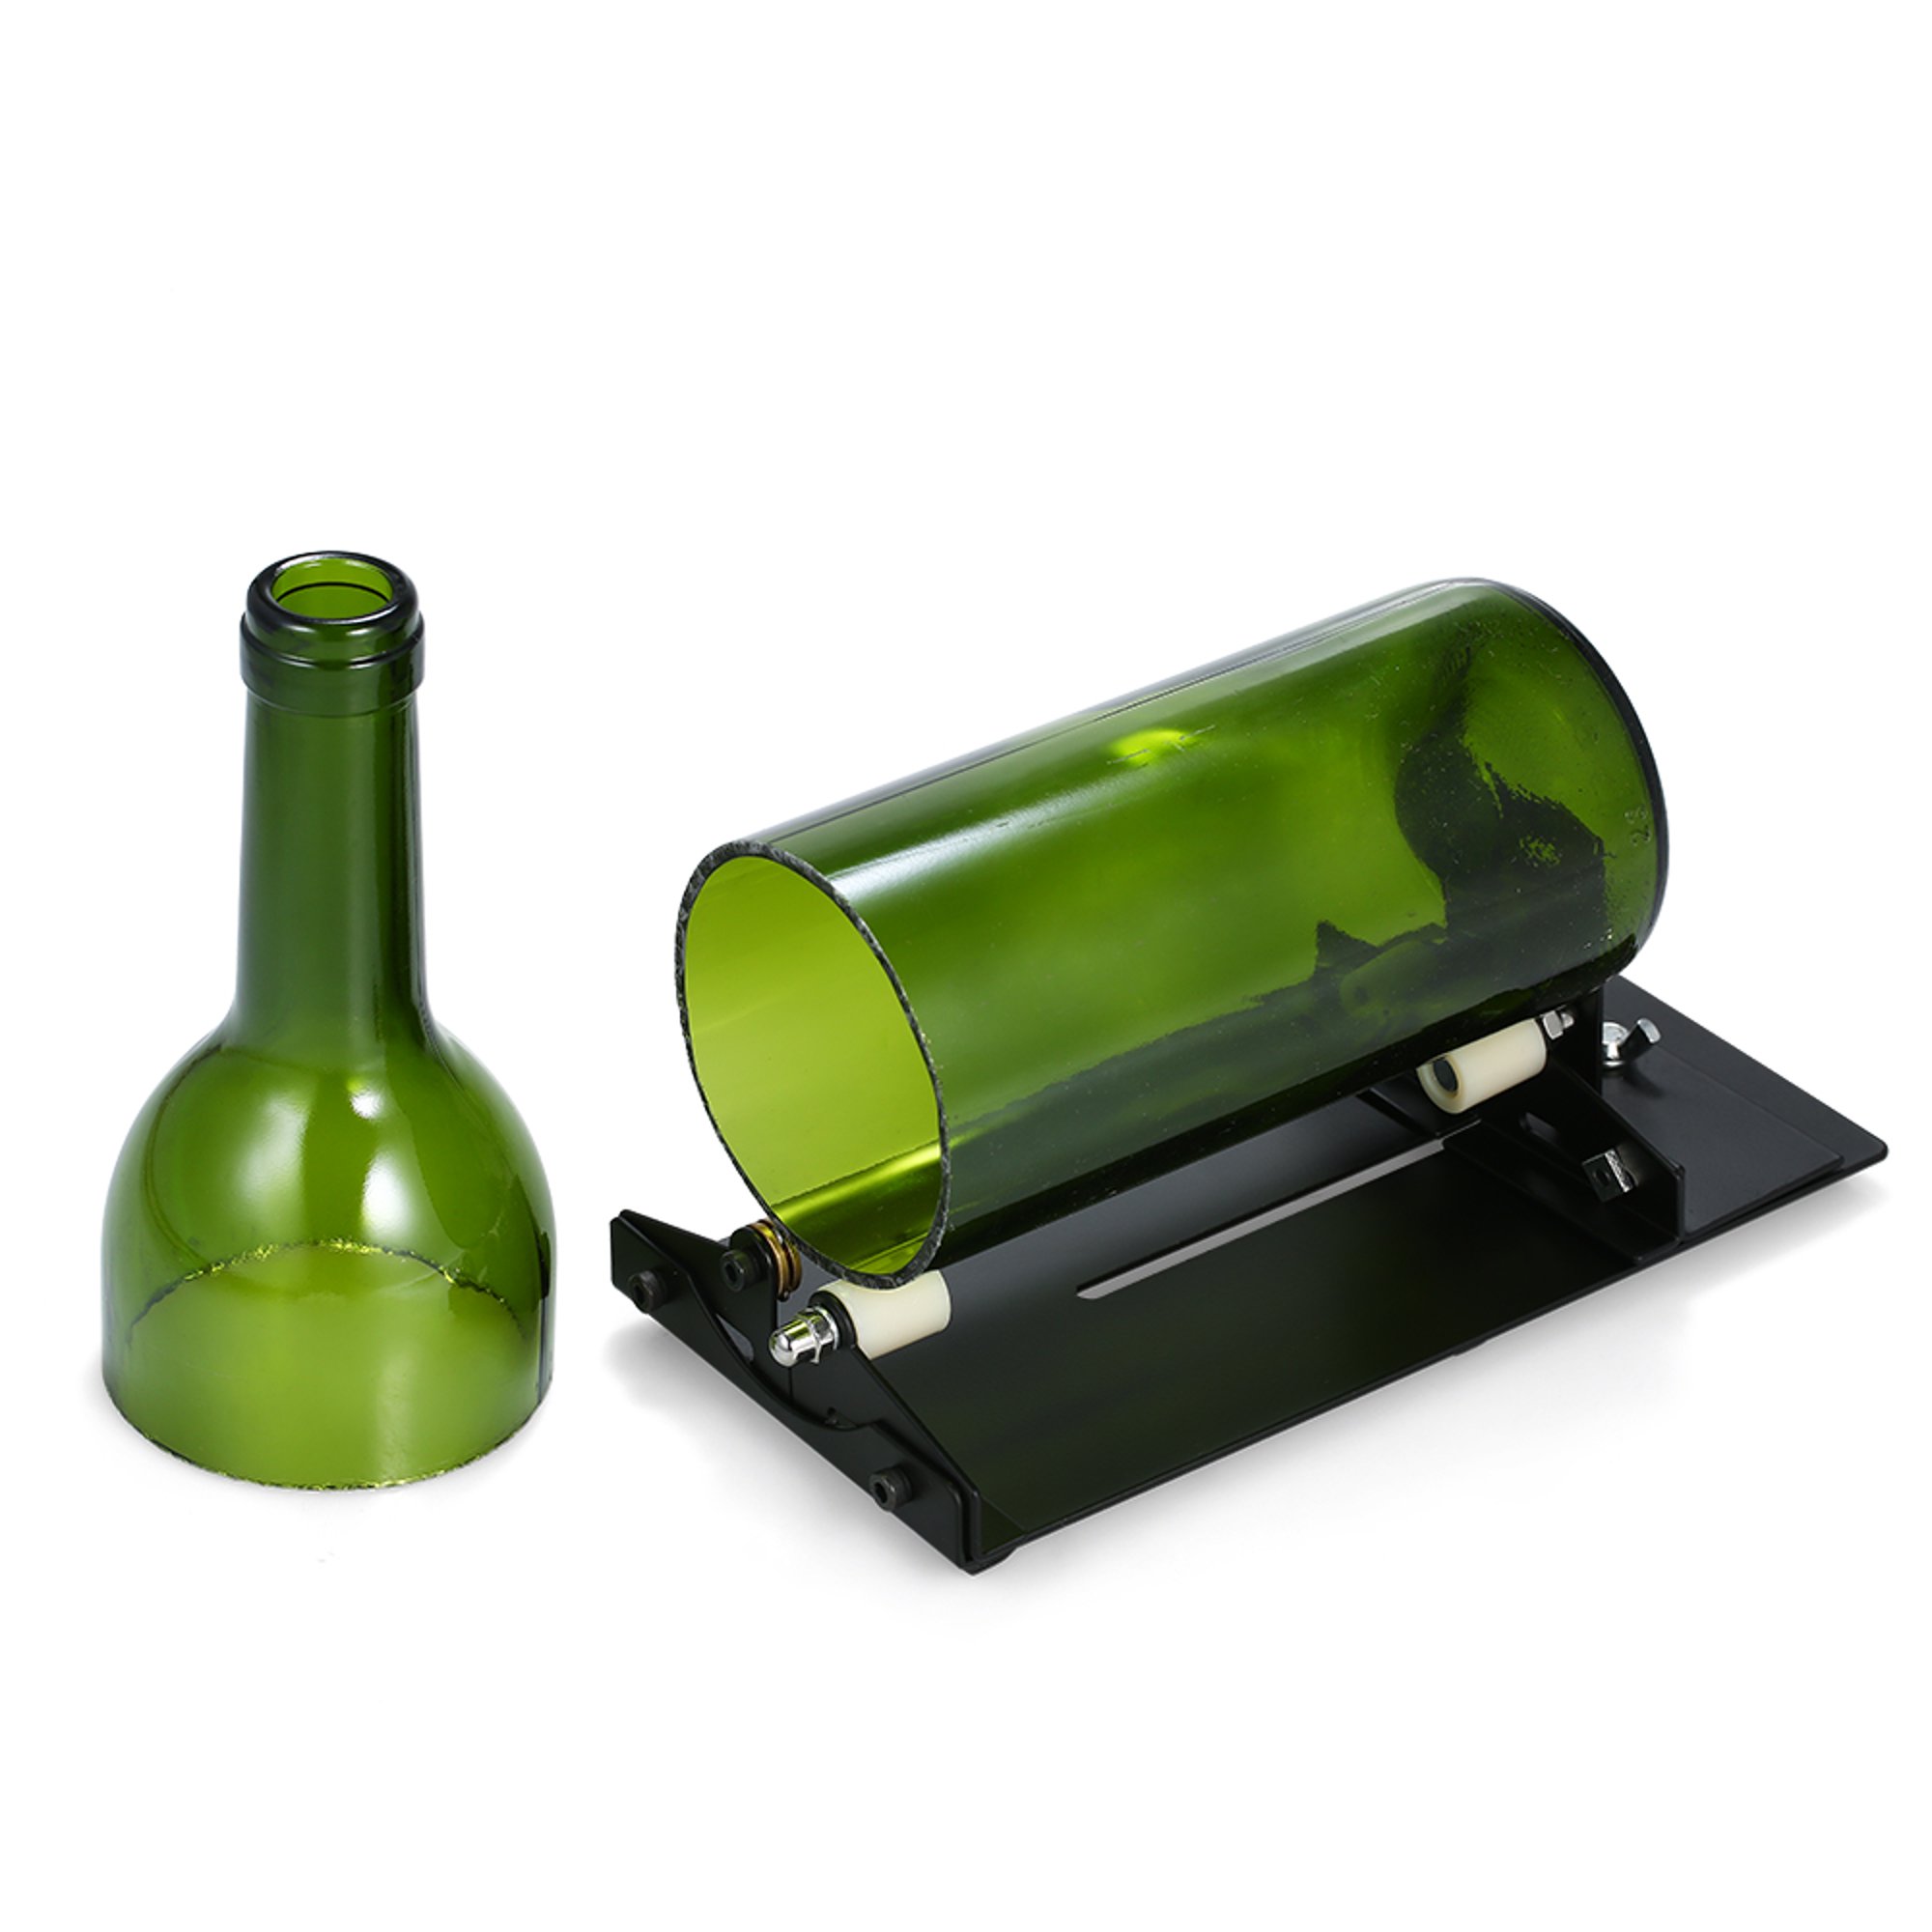 Cortavidrios Irfora Kit de cortador de botellas de vidrio